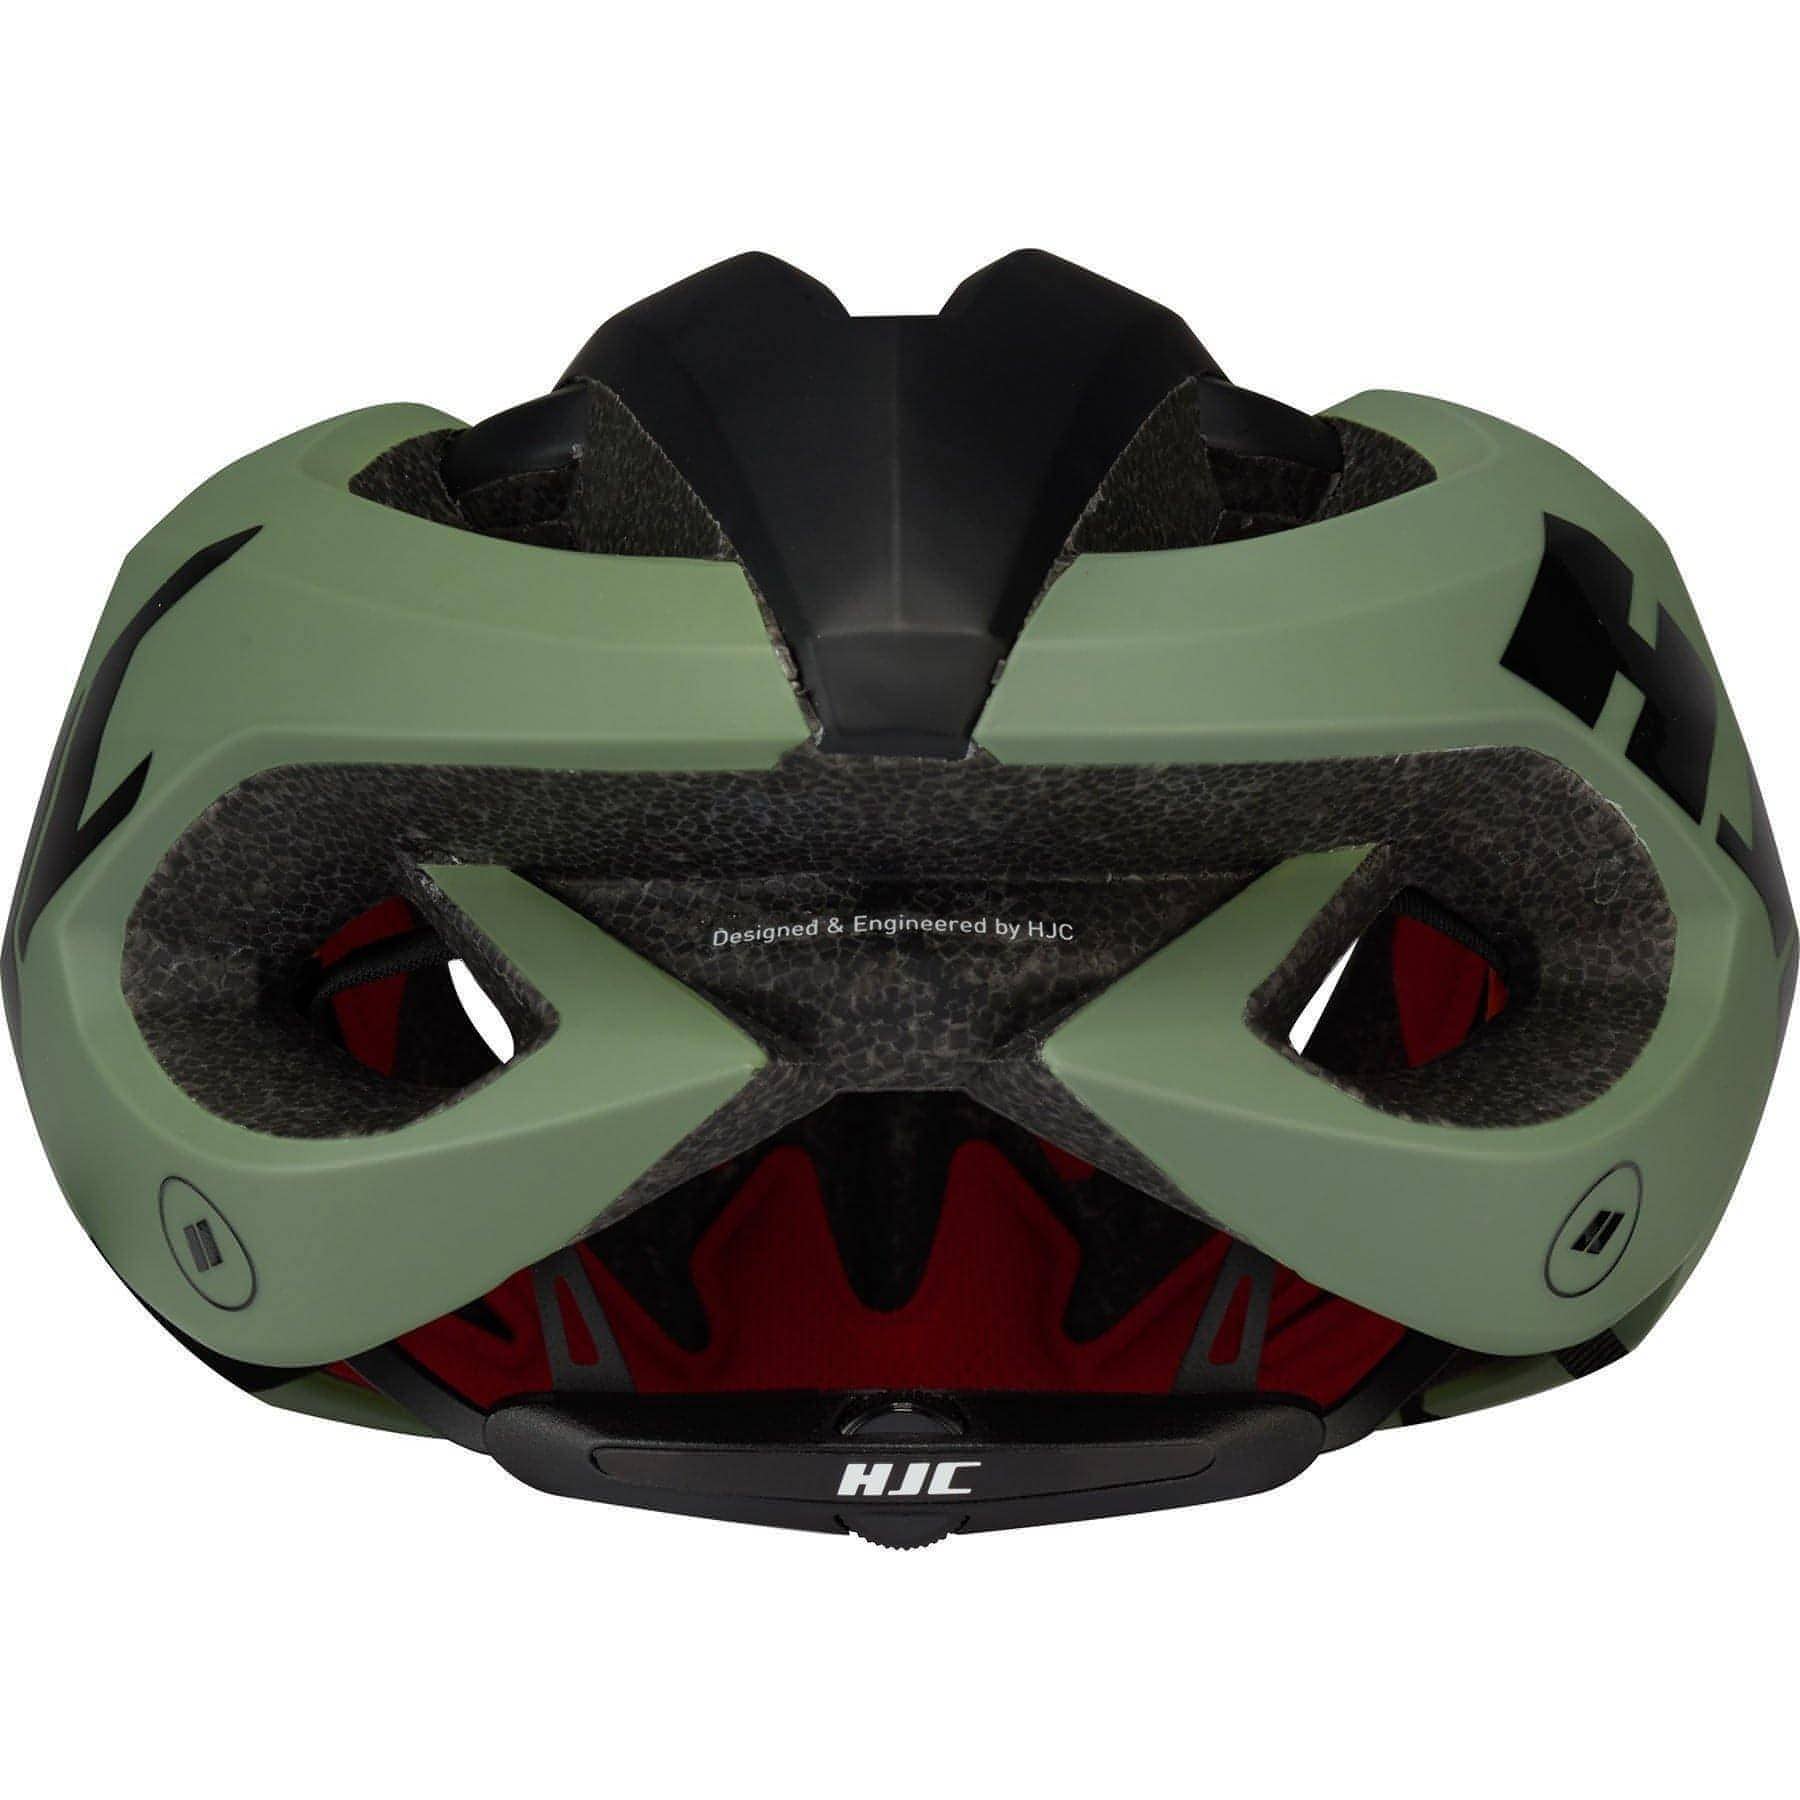 HJC Valeco Road Cycling Helmet - Green - Start Fitness